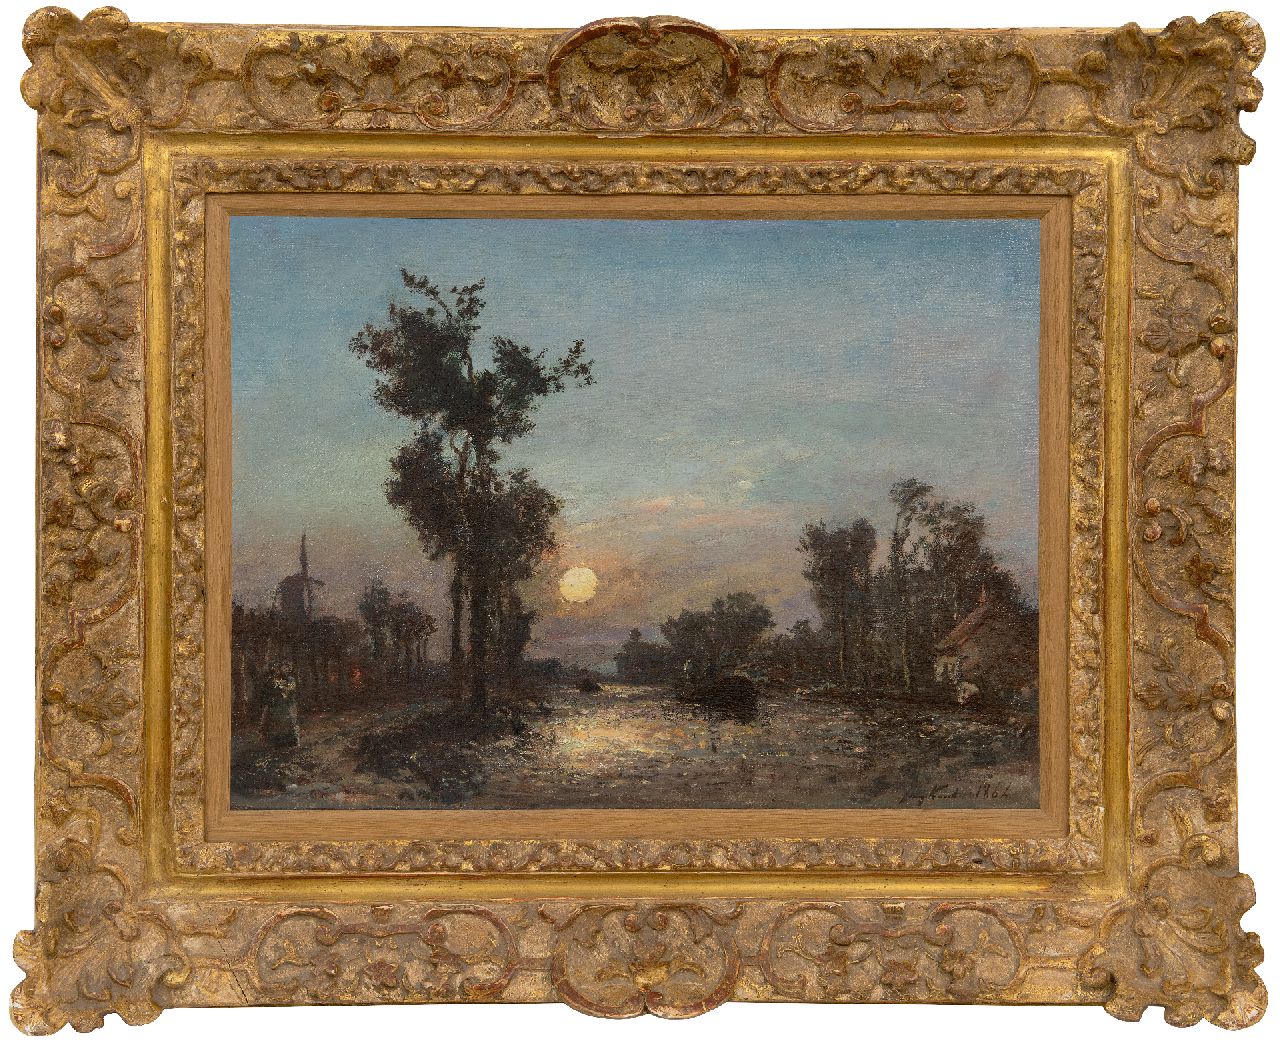 Jongkind J.B.  | Johan Barthold Jongkind, Canal en Hollande, olieverf op doek 33,8 x 45,9 cm, gesigneerd rechtsonder en gedateerd 1864